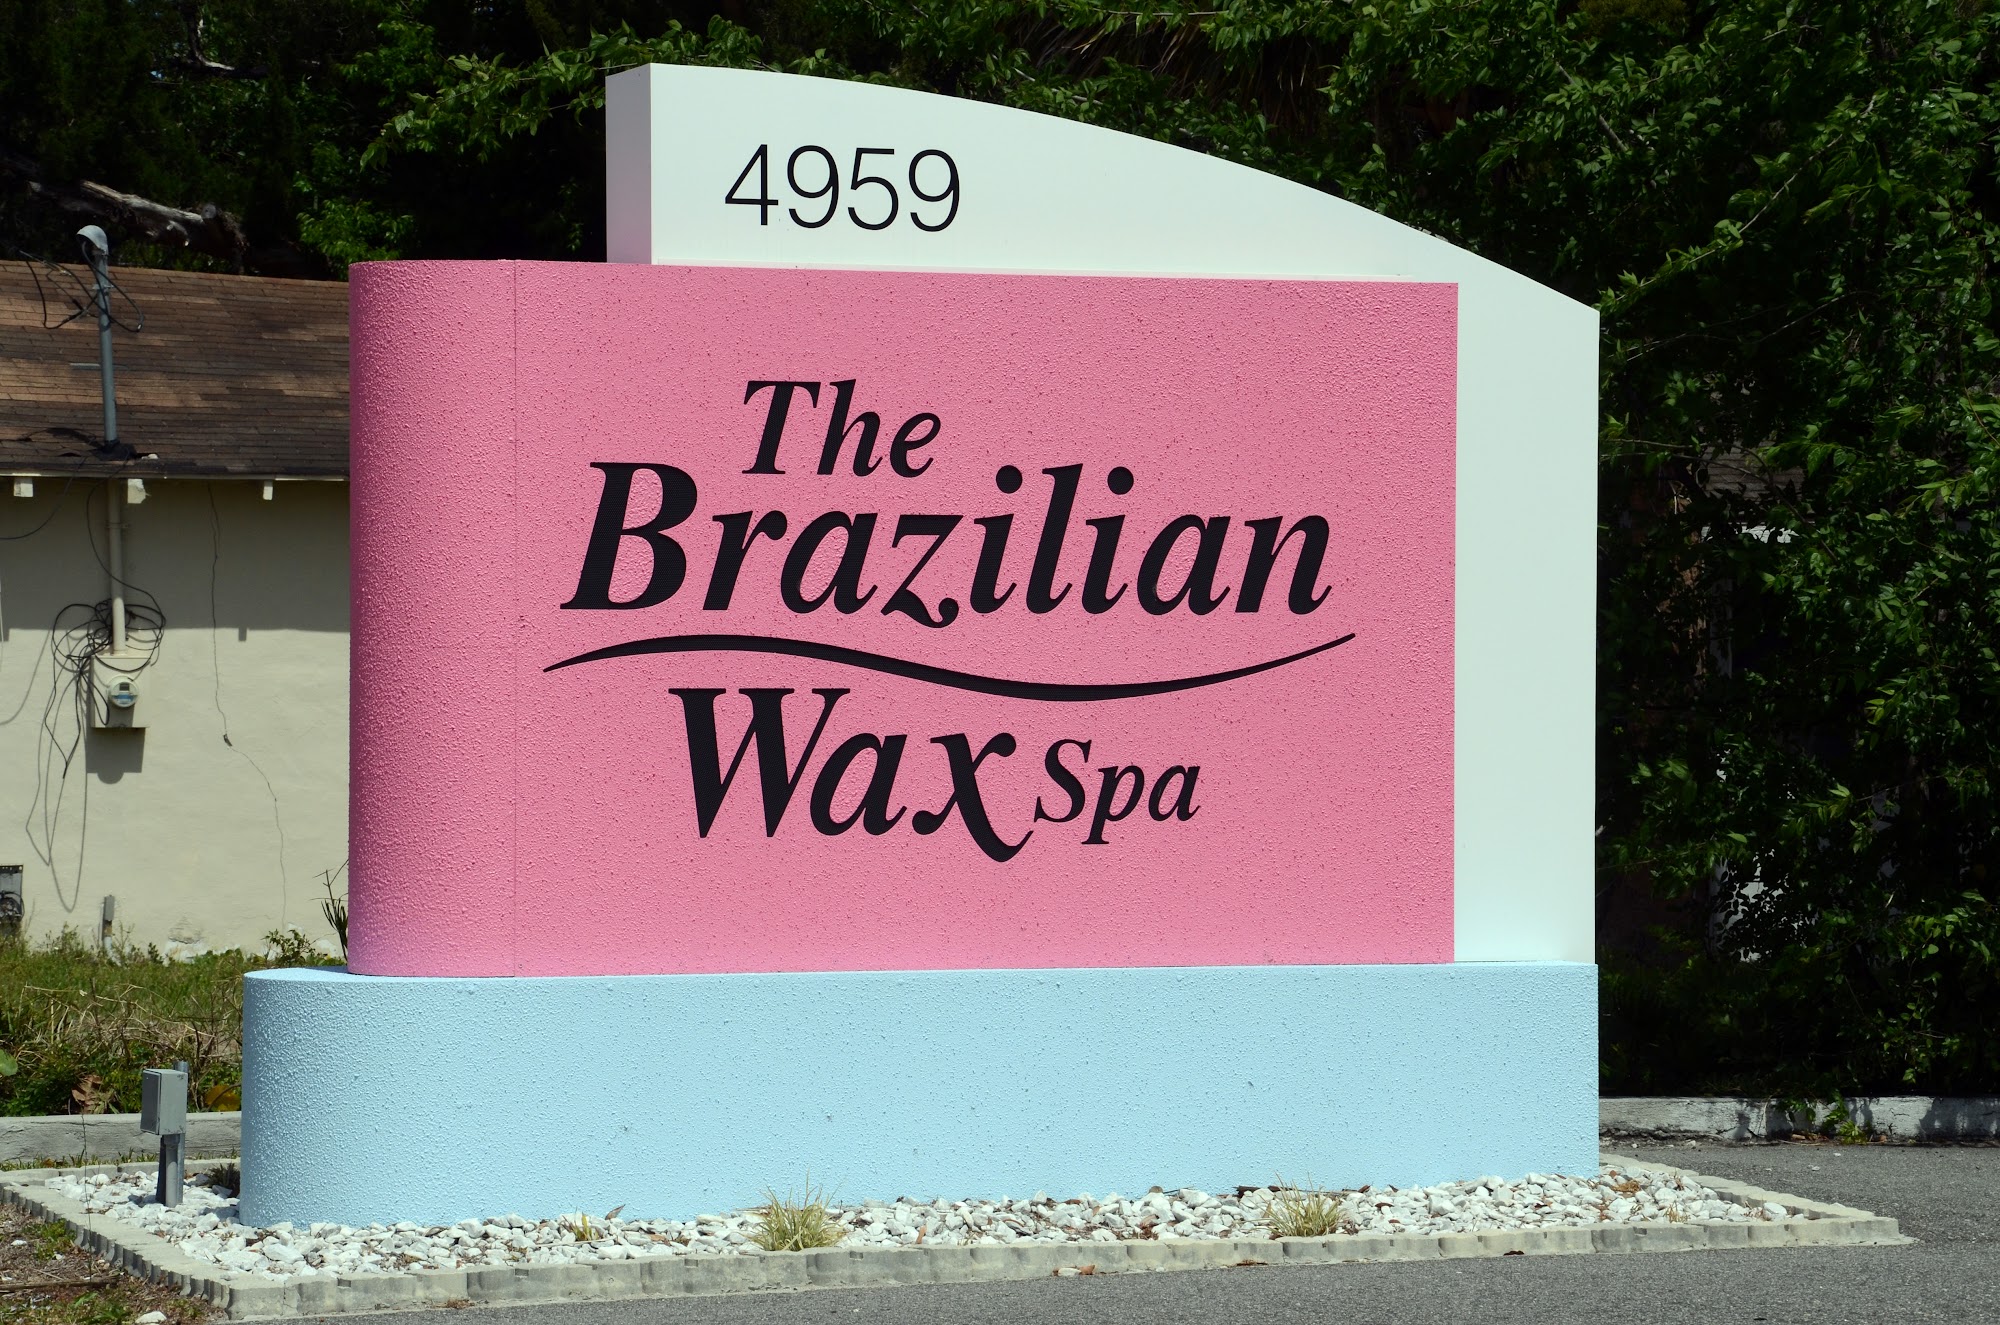 The Brazilian Wax Spa - Waxing Body Hair Removal & Facials Treatment